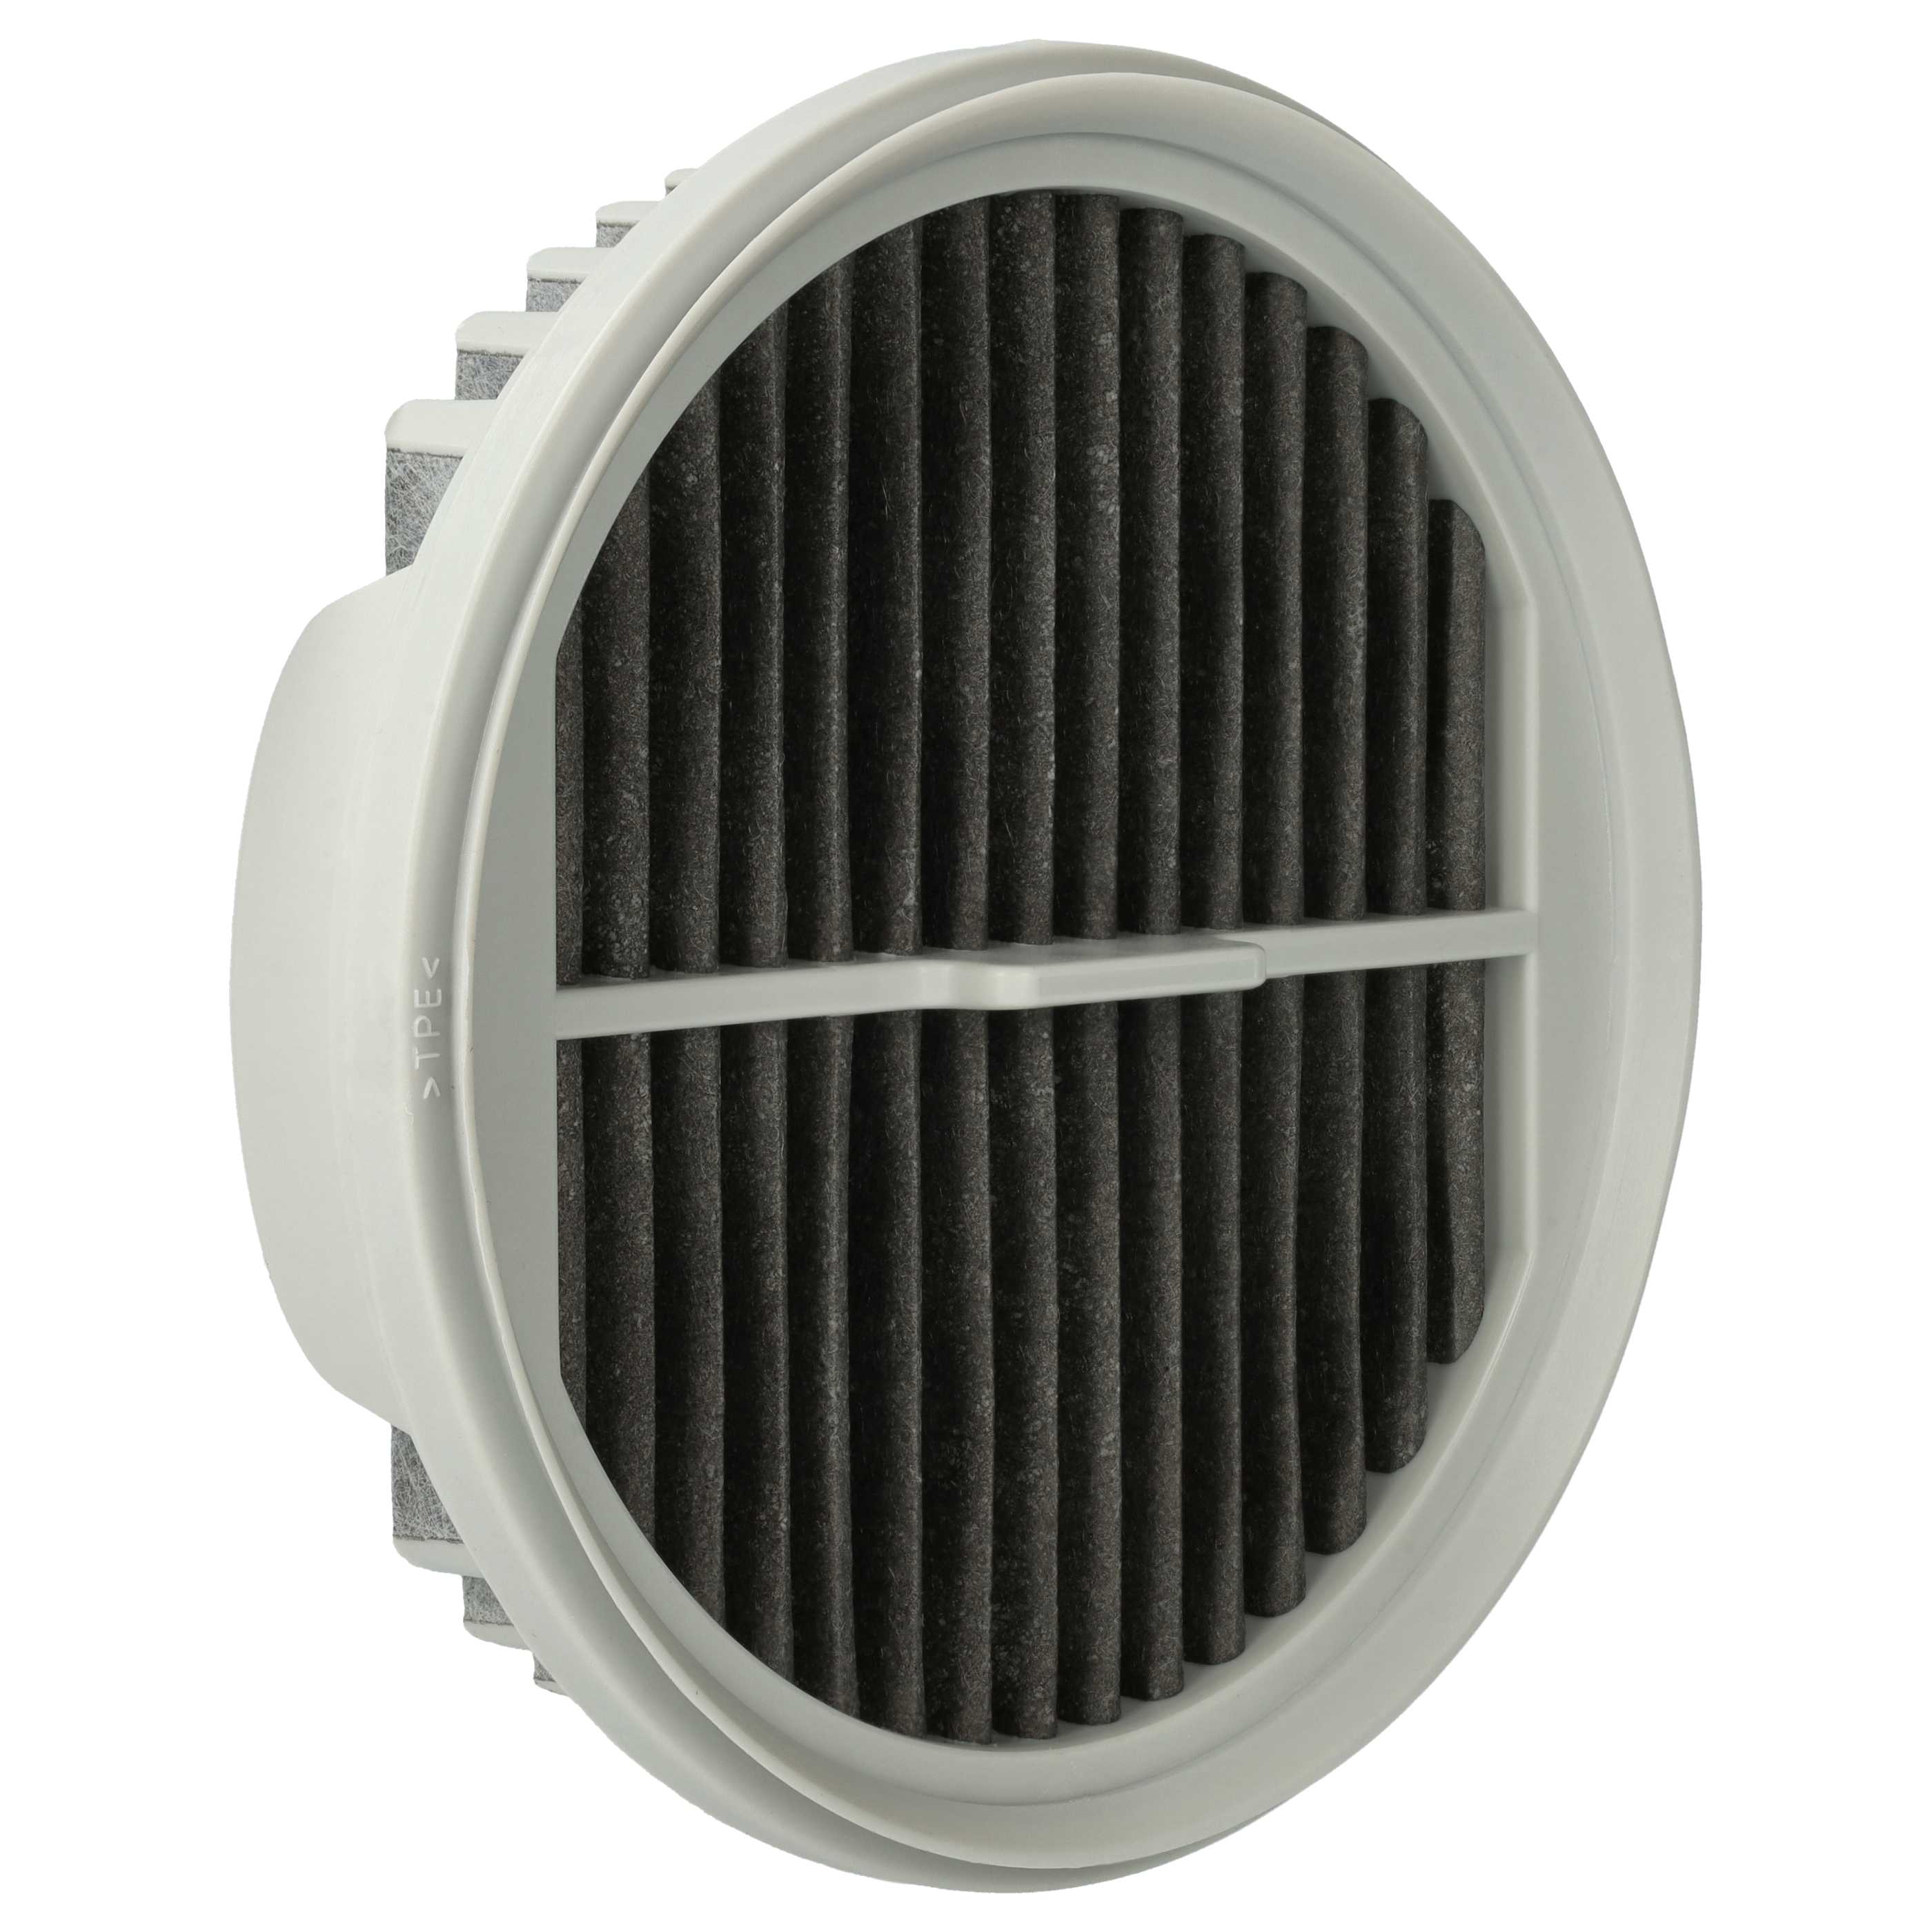 3x dust filter suitable for F8 Pro Xiaomi Roidmi Vacuum Cleaner